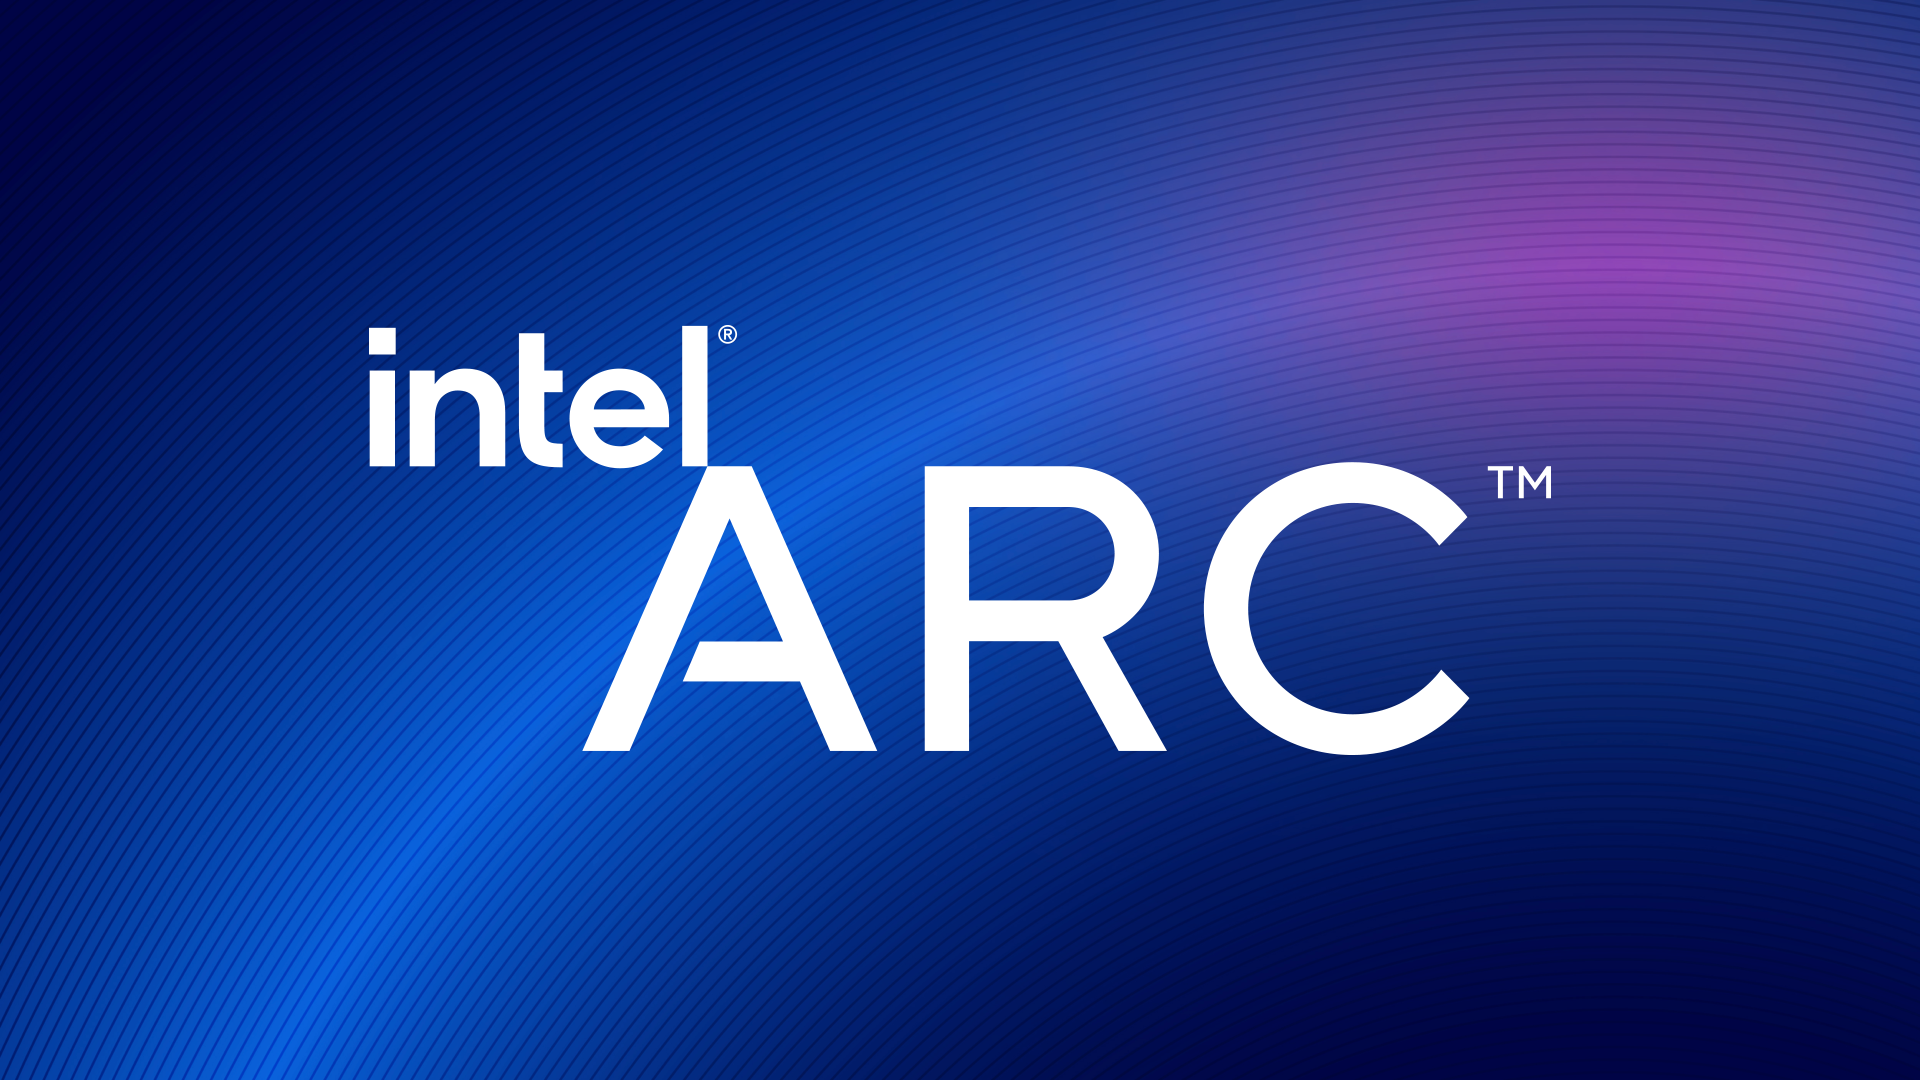 Arc intel Intel's long